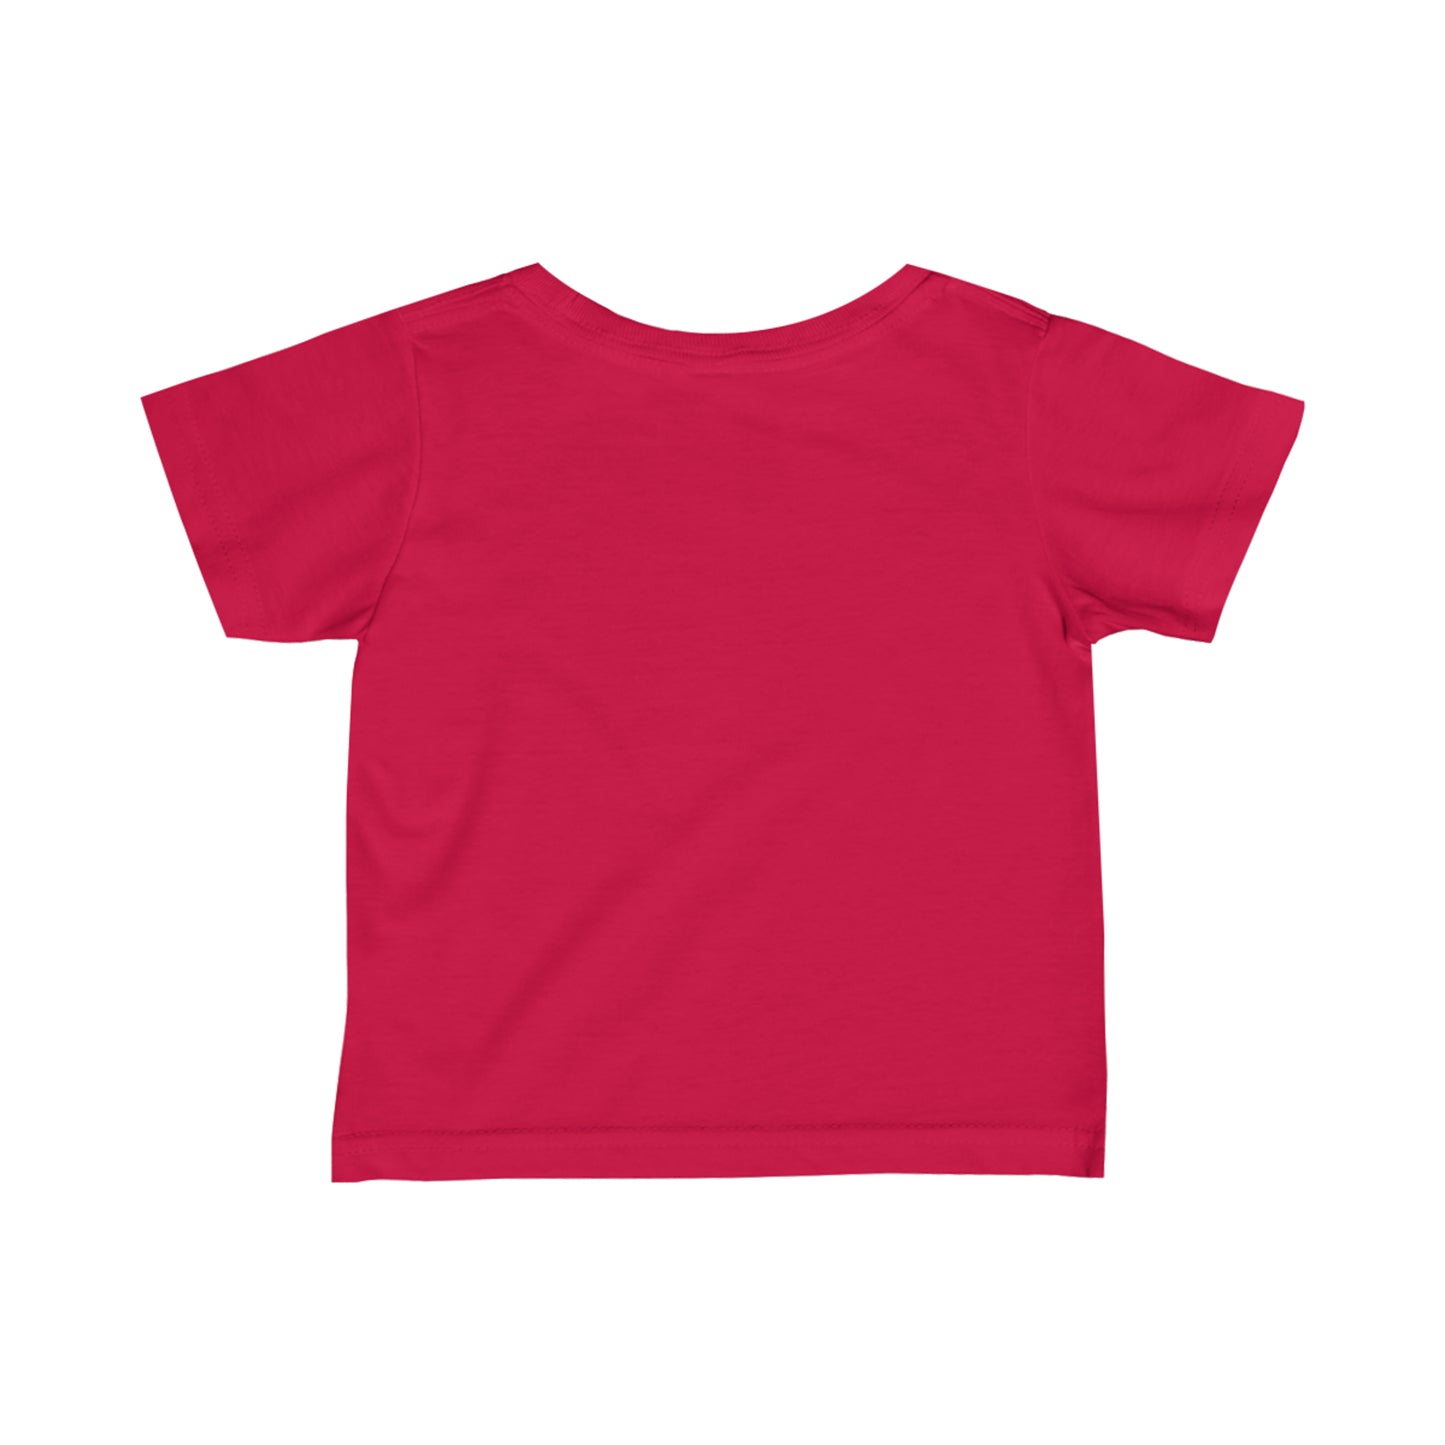 Boo Bee's Breast Cancer Halloween T-shirt